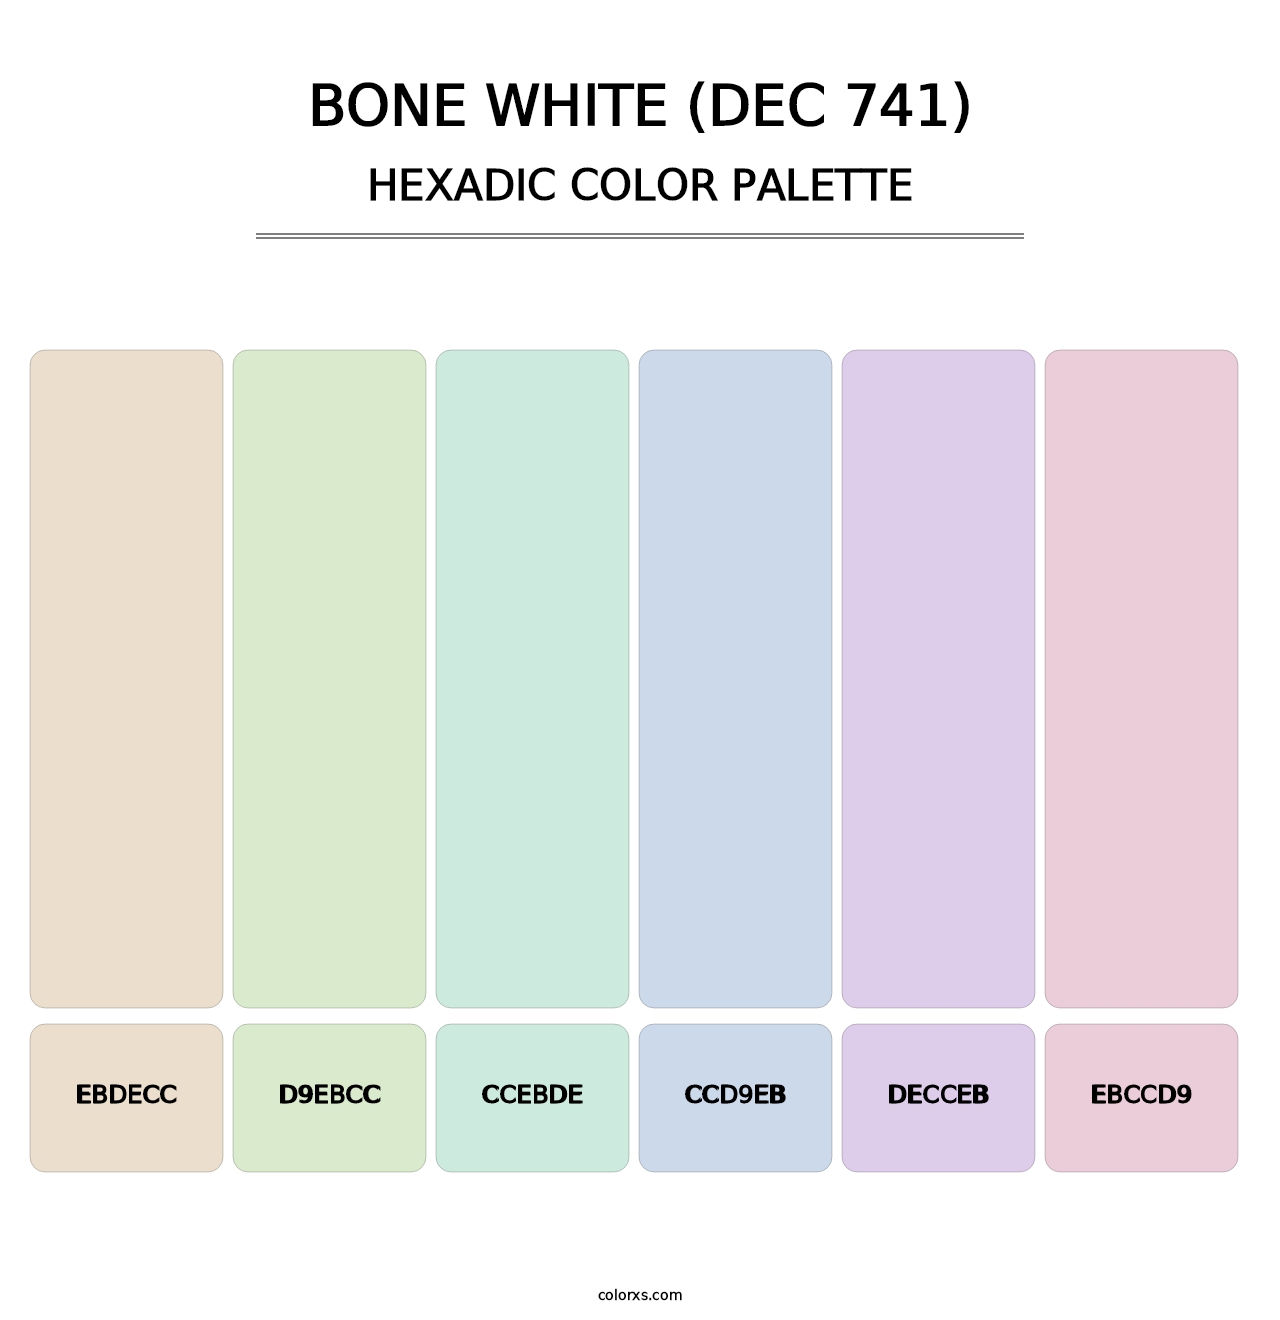 Bone White (DEC 741) - Hexadic Color Palette